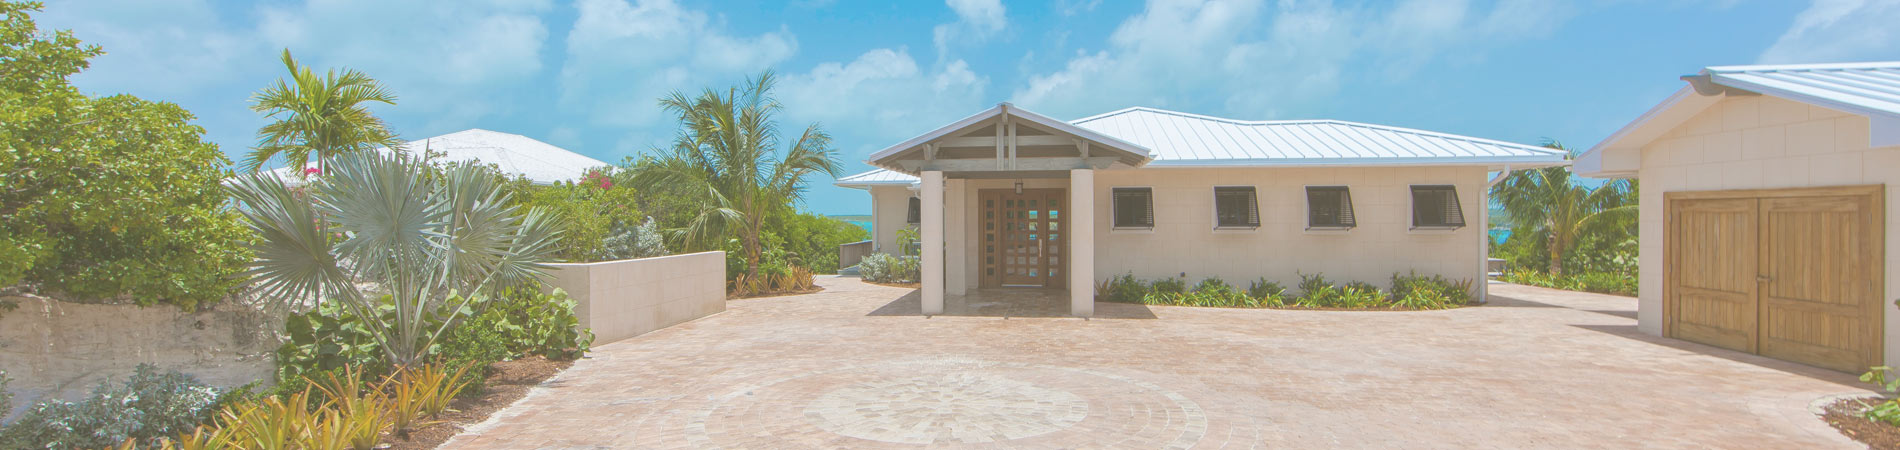 Staniel Cay Beach House Rental